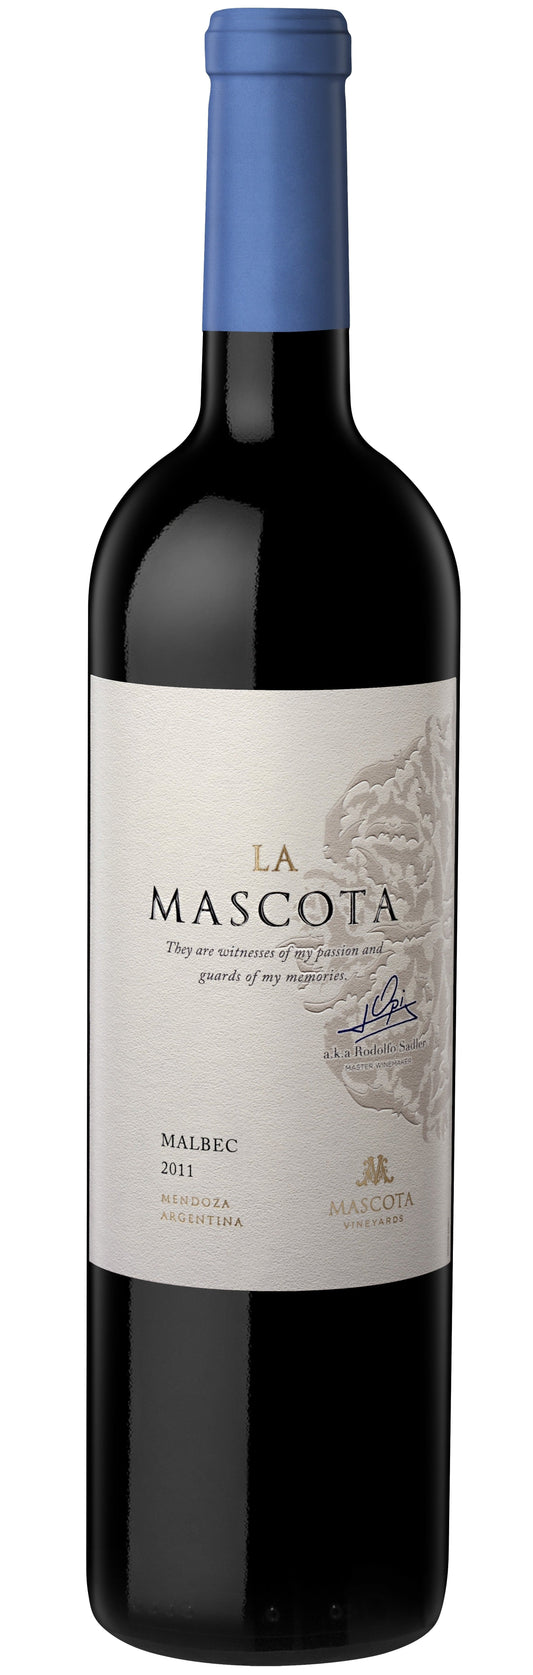 La Mascota Malbec - Premium Red Wine from Mascota Vineyards - Shop now at Whiskery